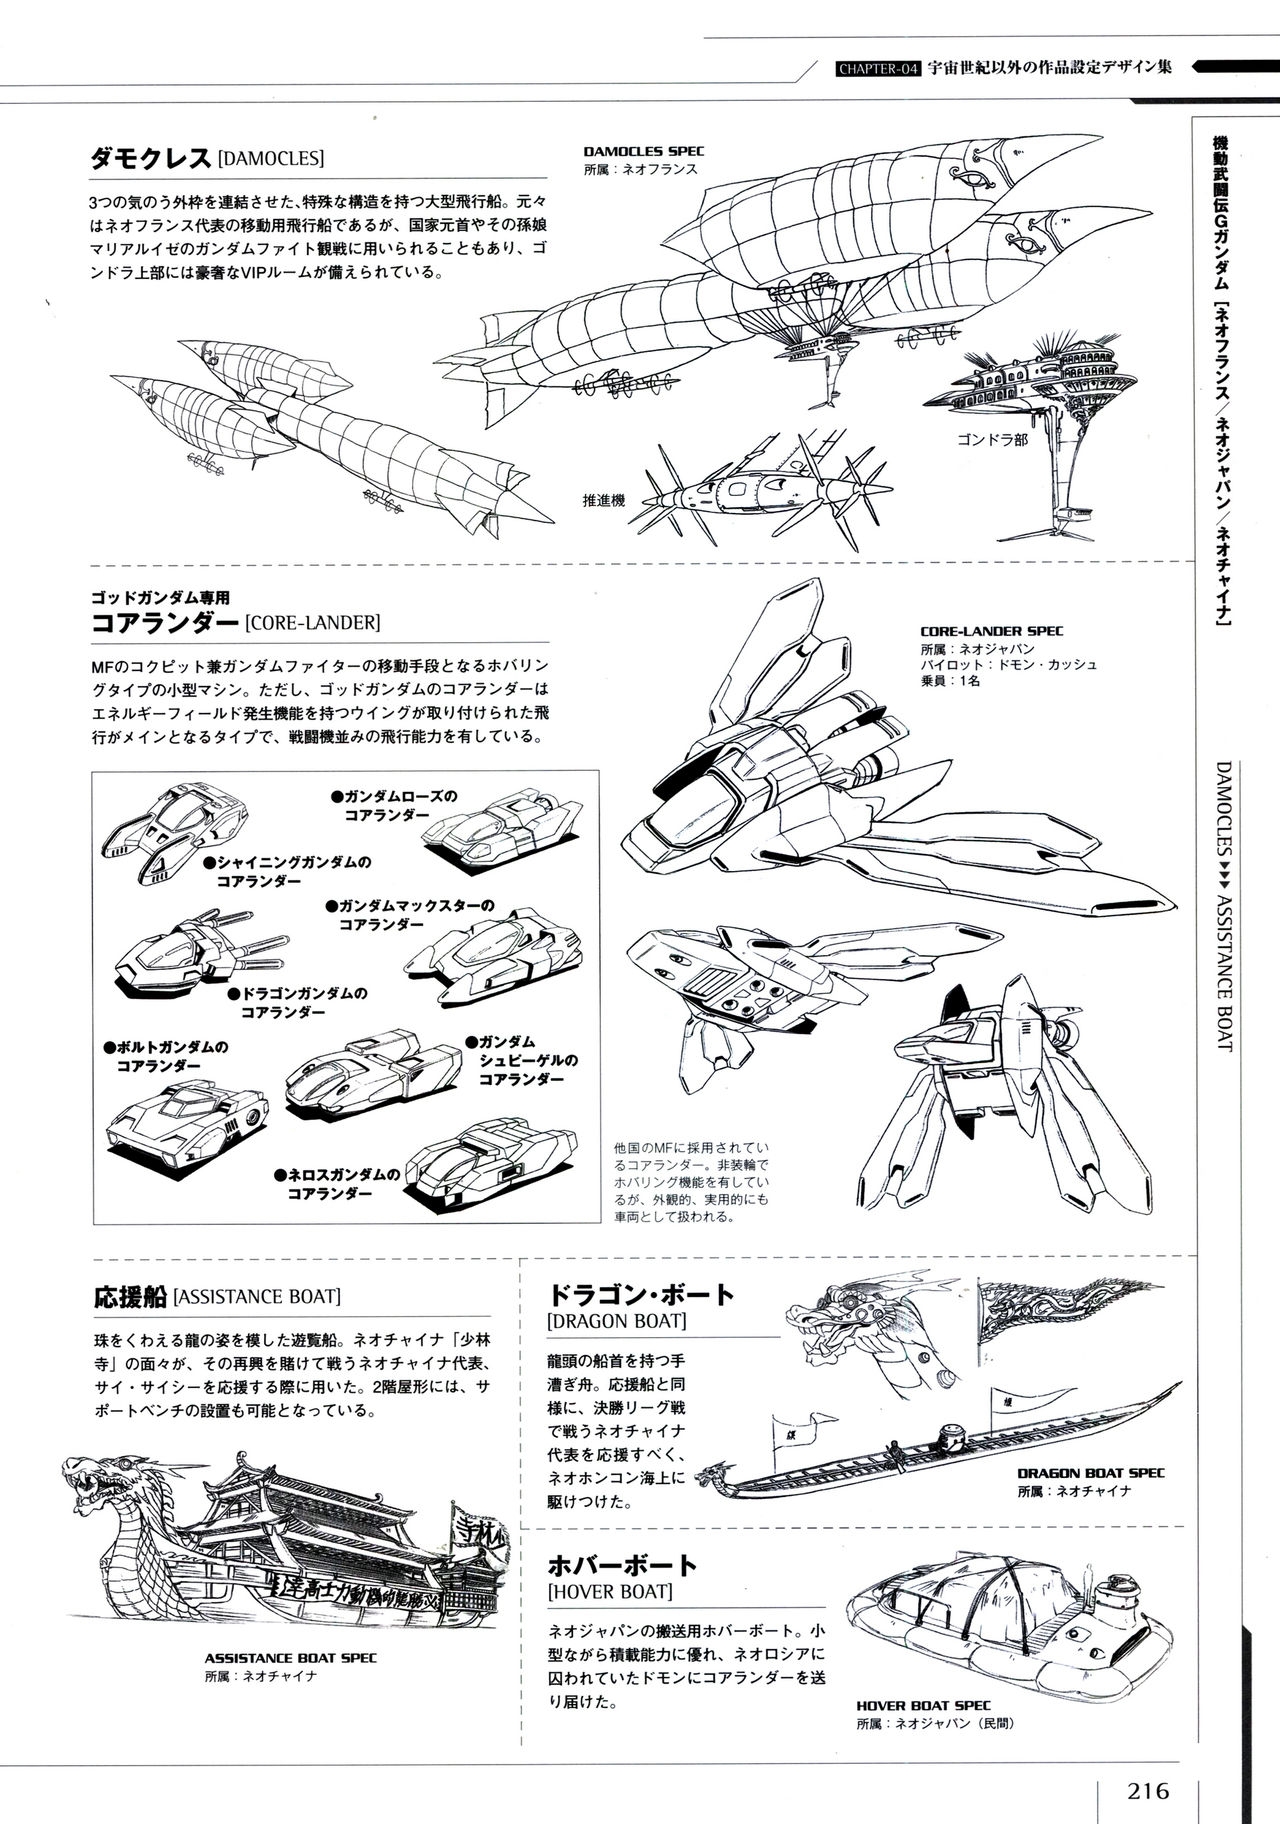 Mobile Suit Gundam - Ship & Aerospace Plane Encyclopedia - Revised Edition 221